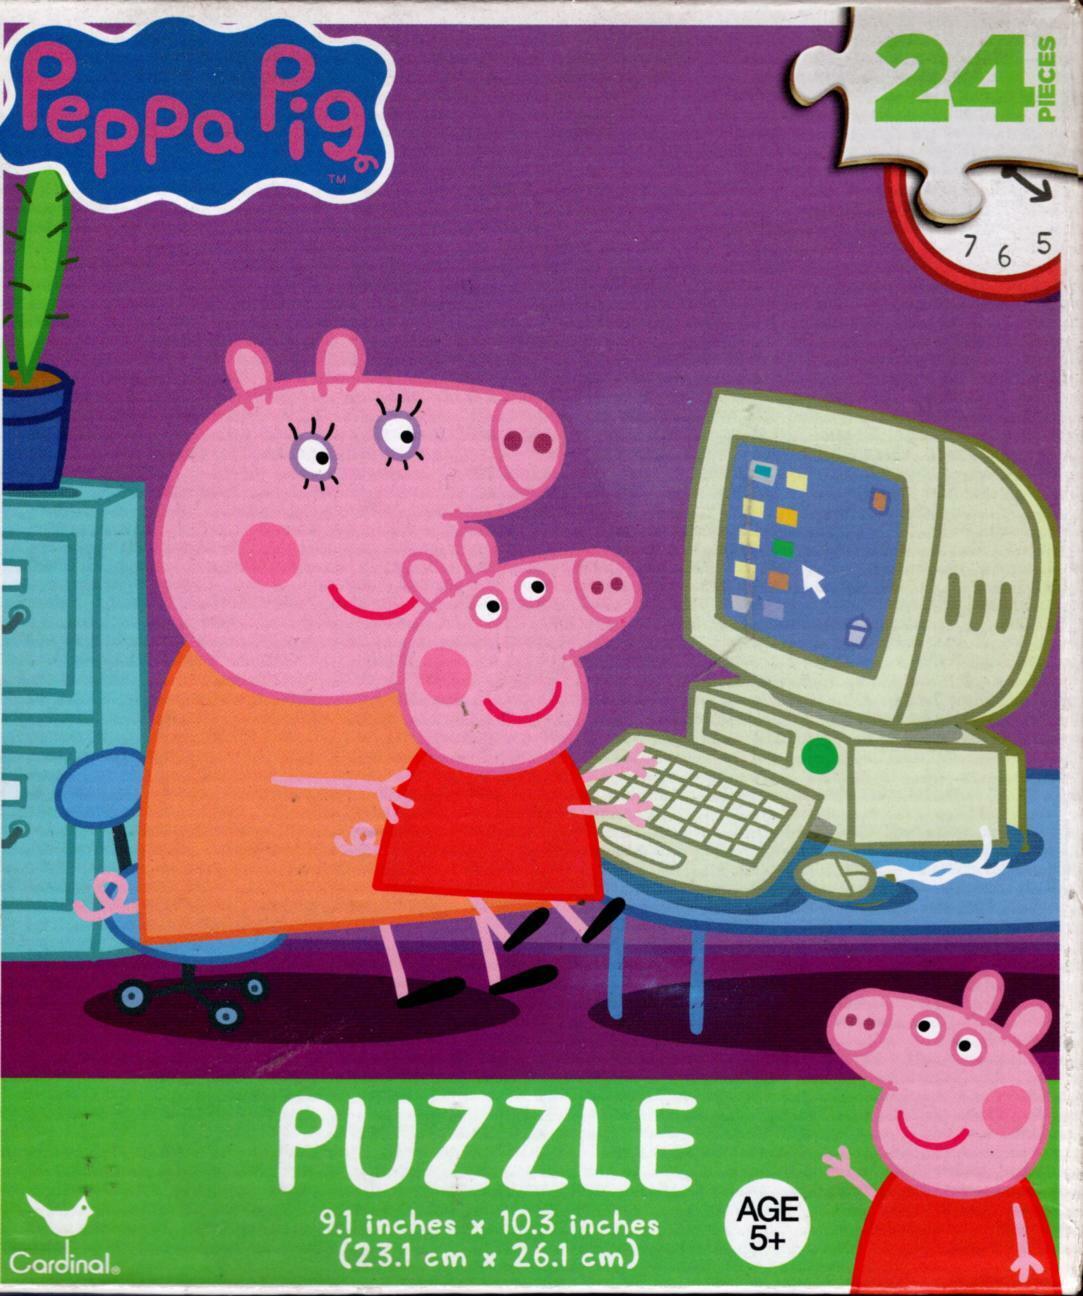 Peppa Pig - 24 Piece Jigsaw Puzzle